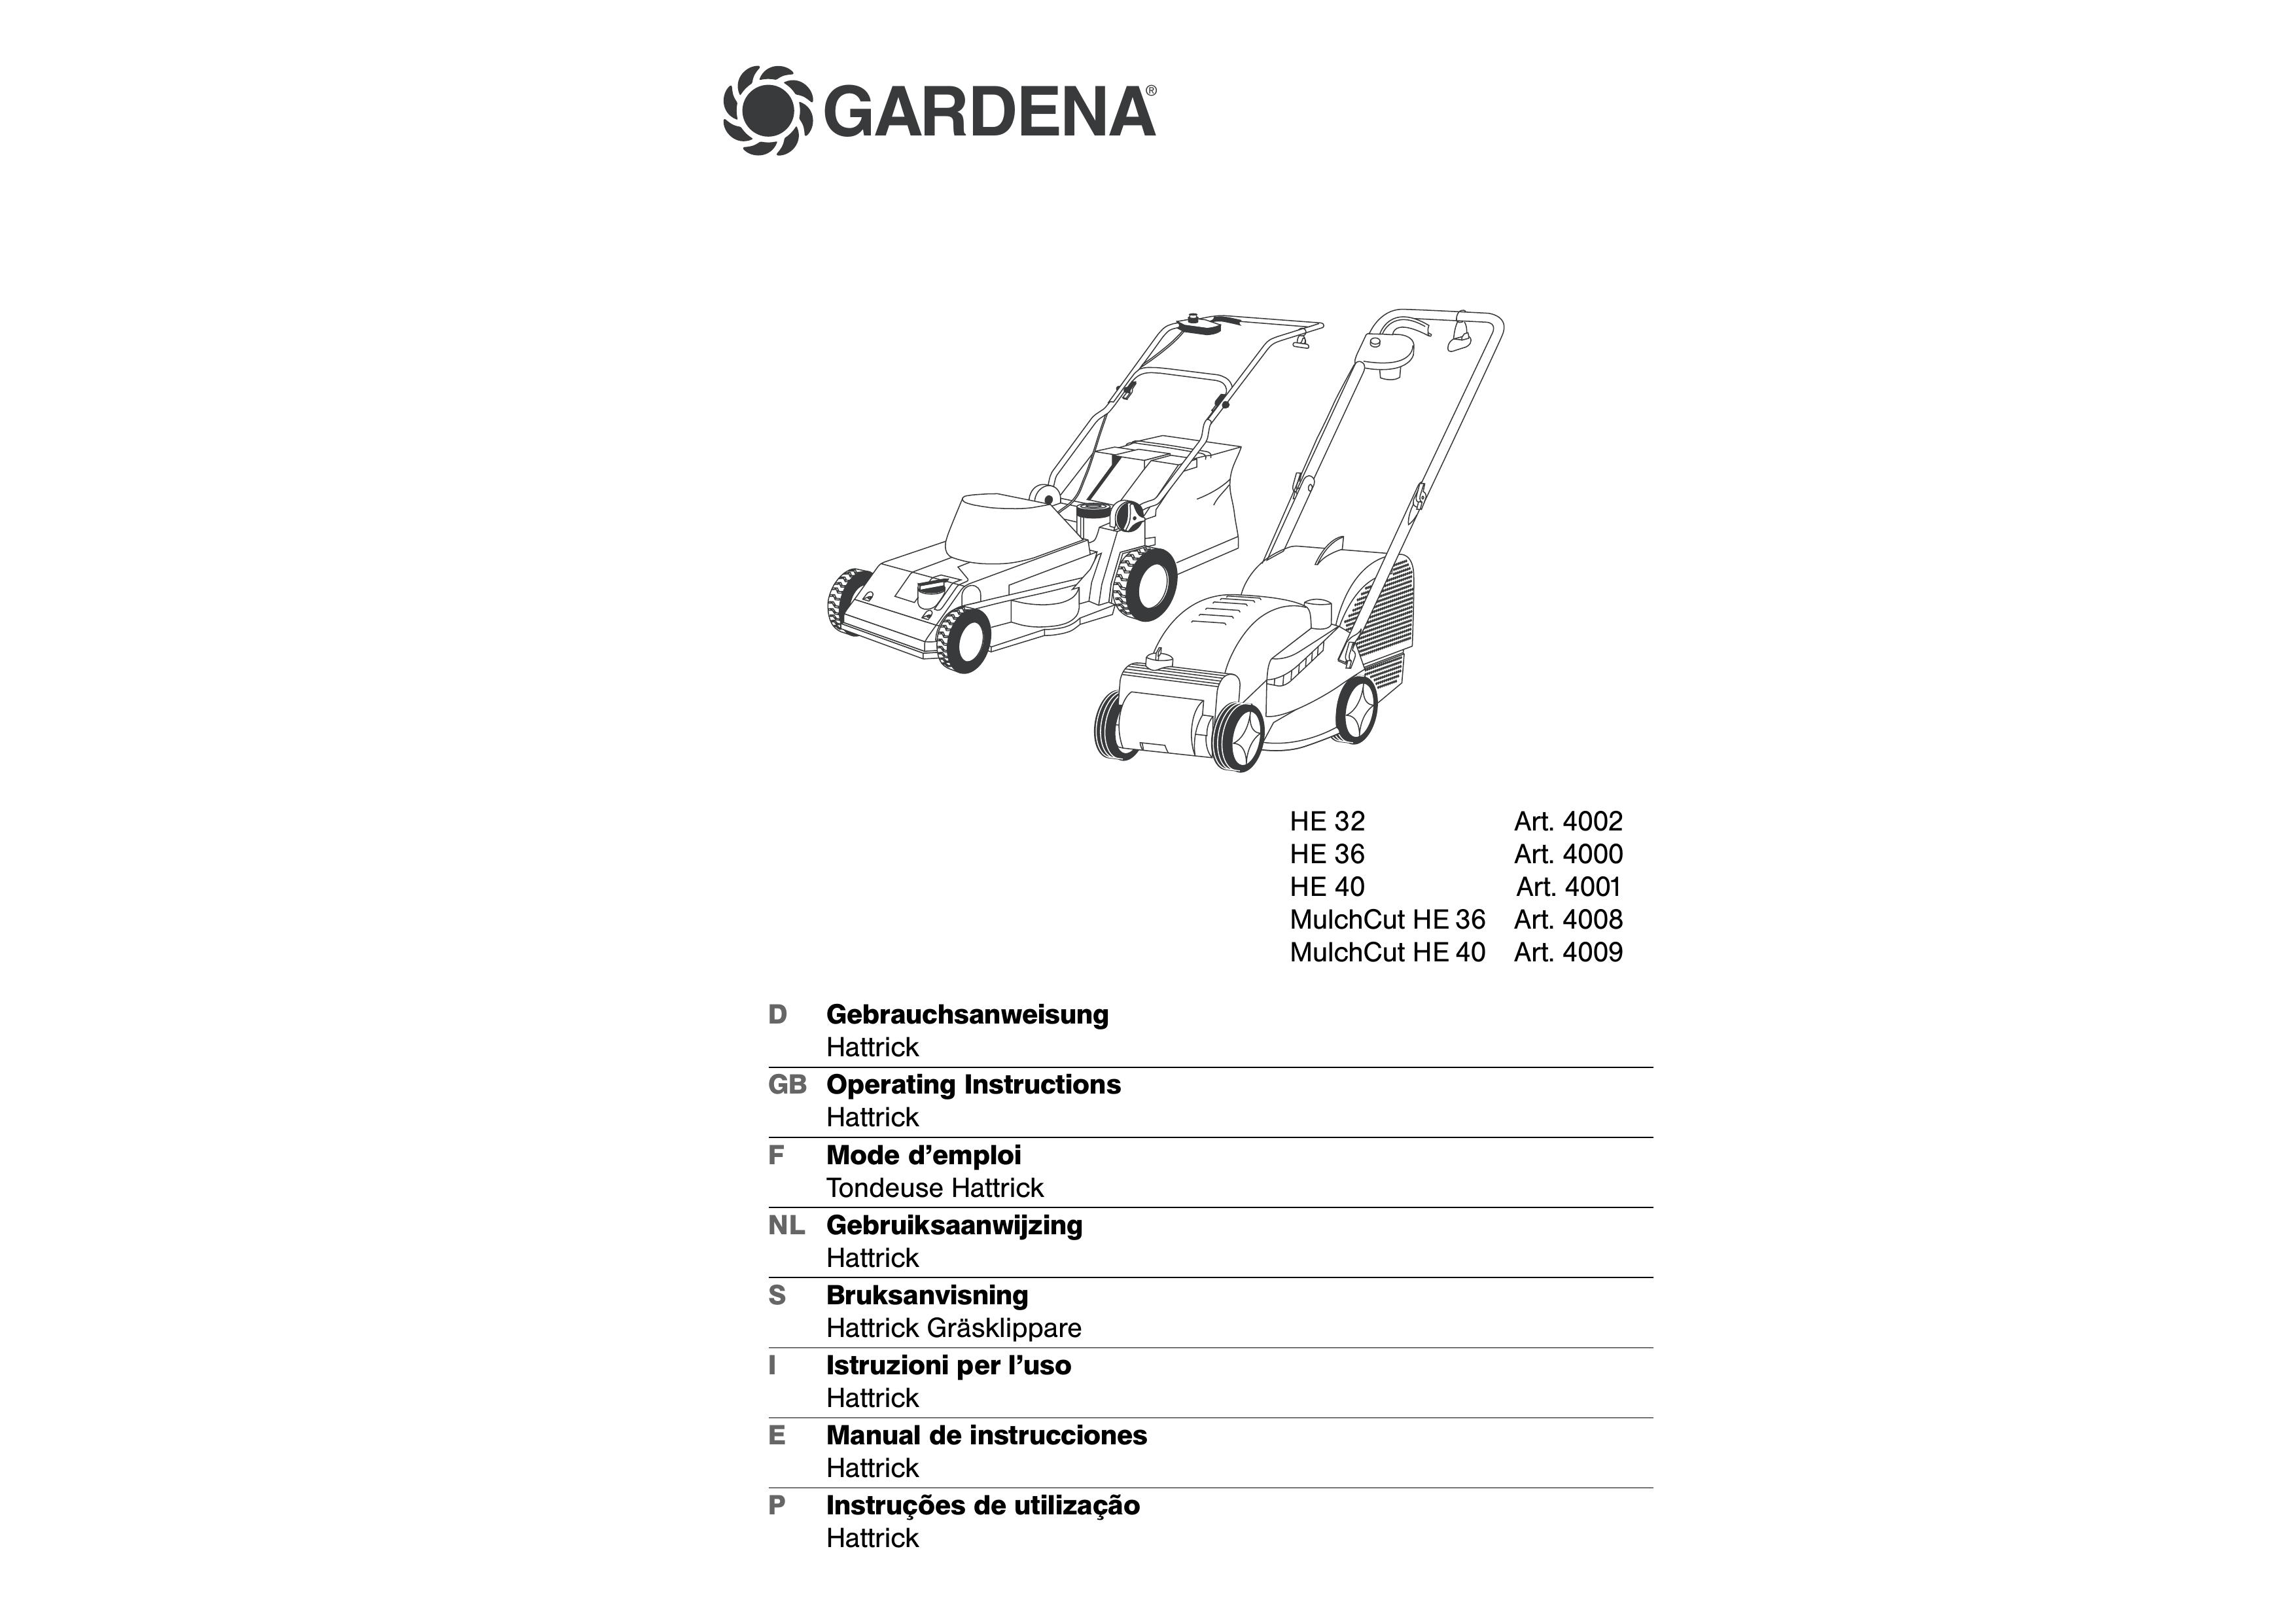 Gardena HE36 Lawn Mower User Manual